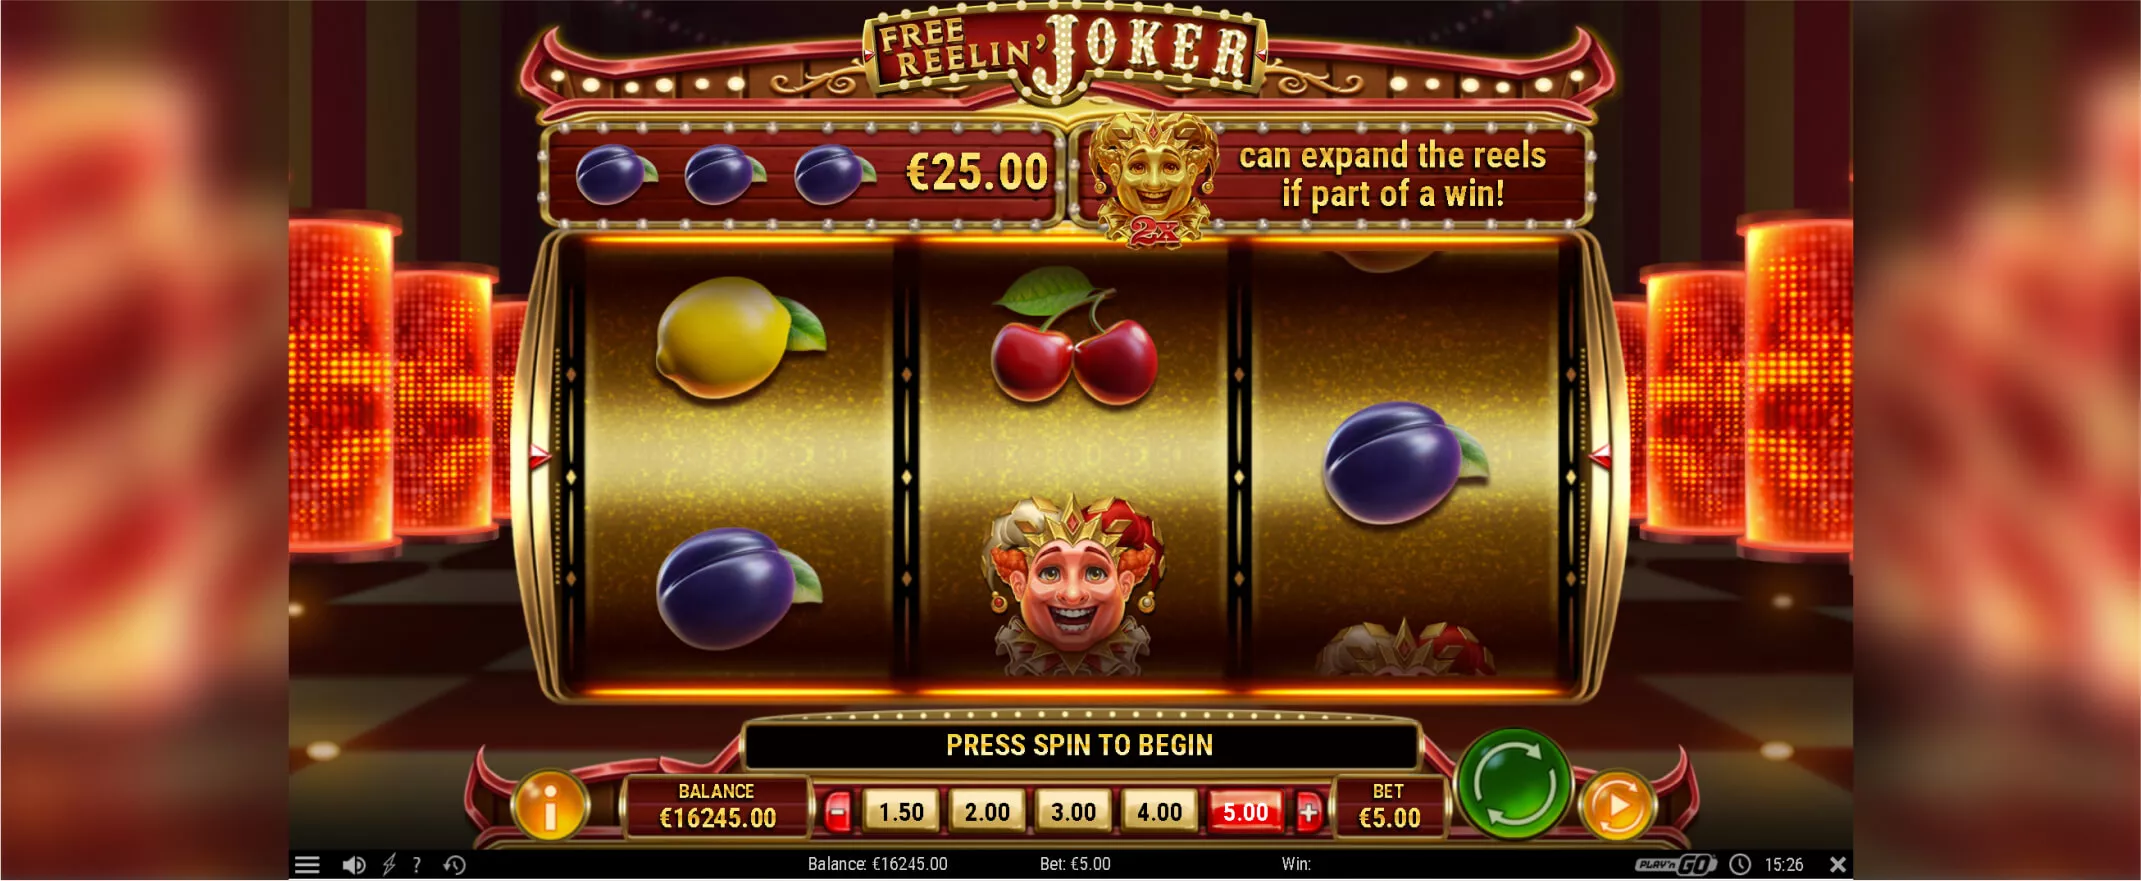 Free Reelin' Joker slot screenshot